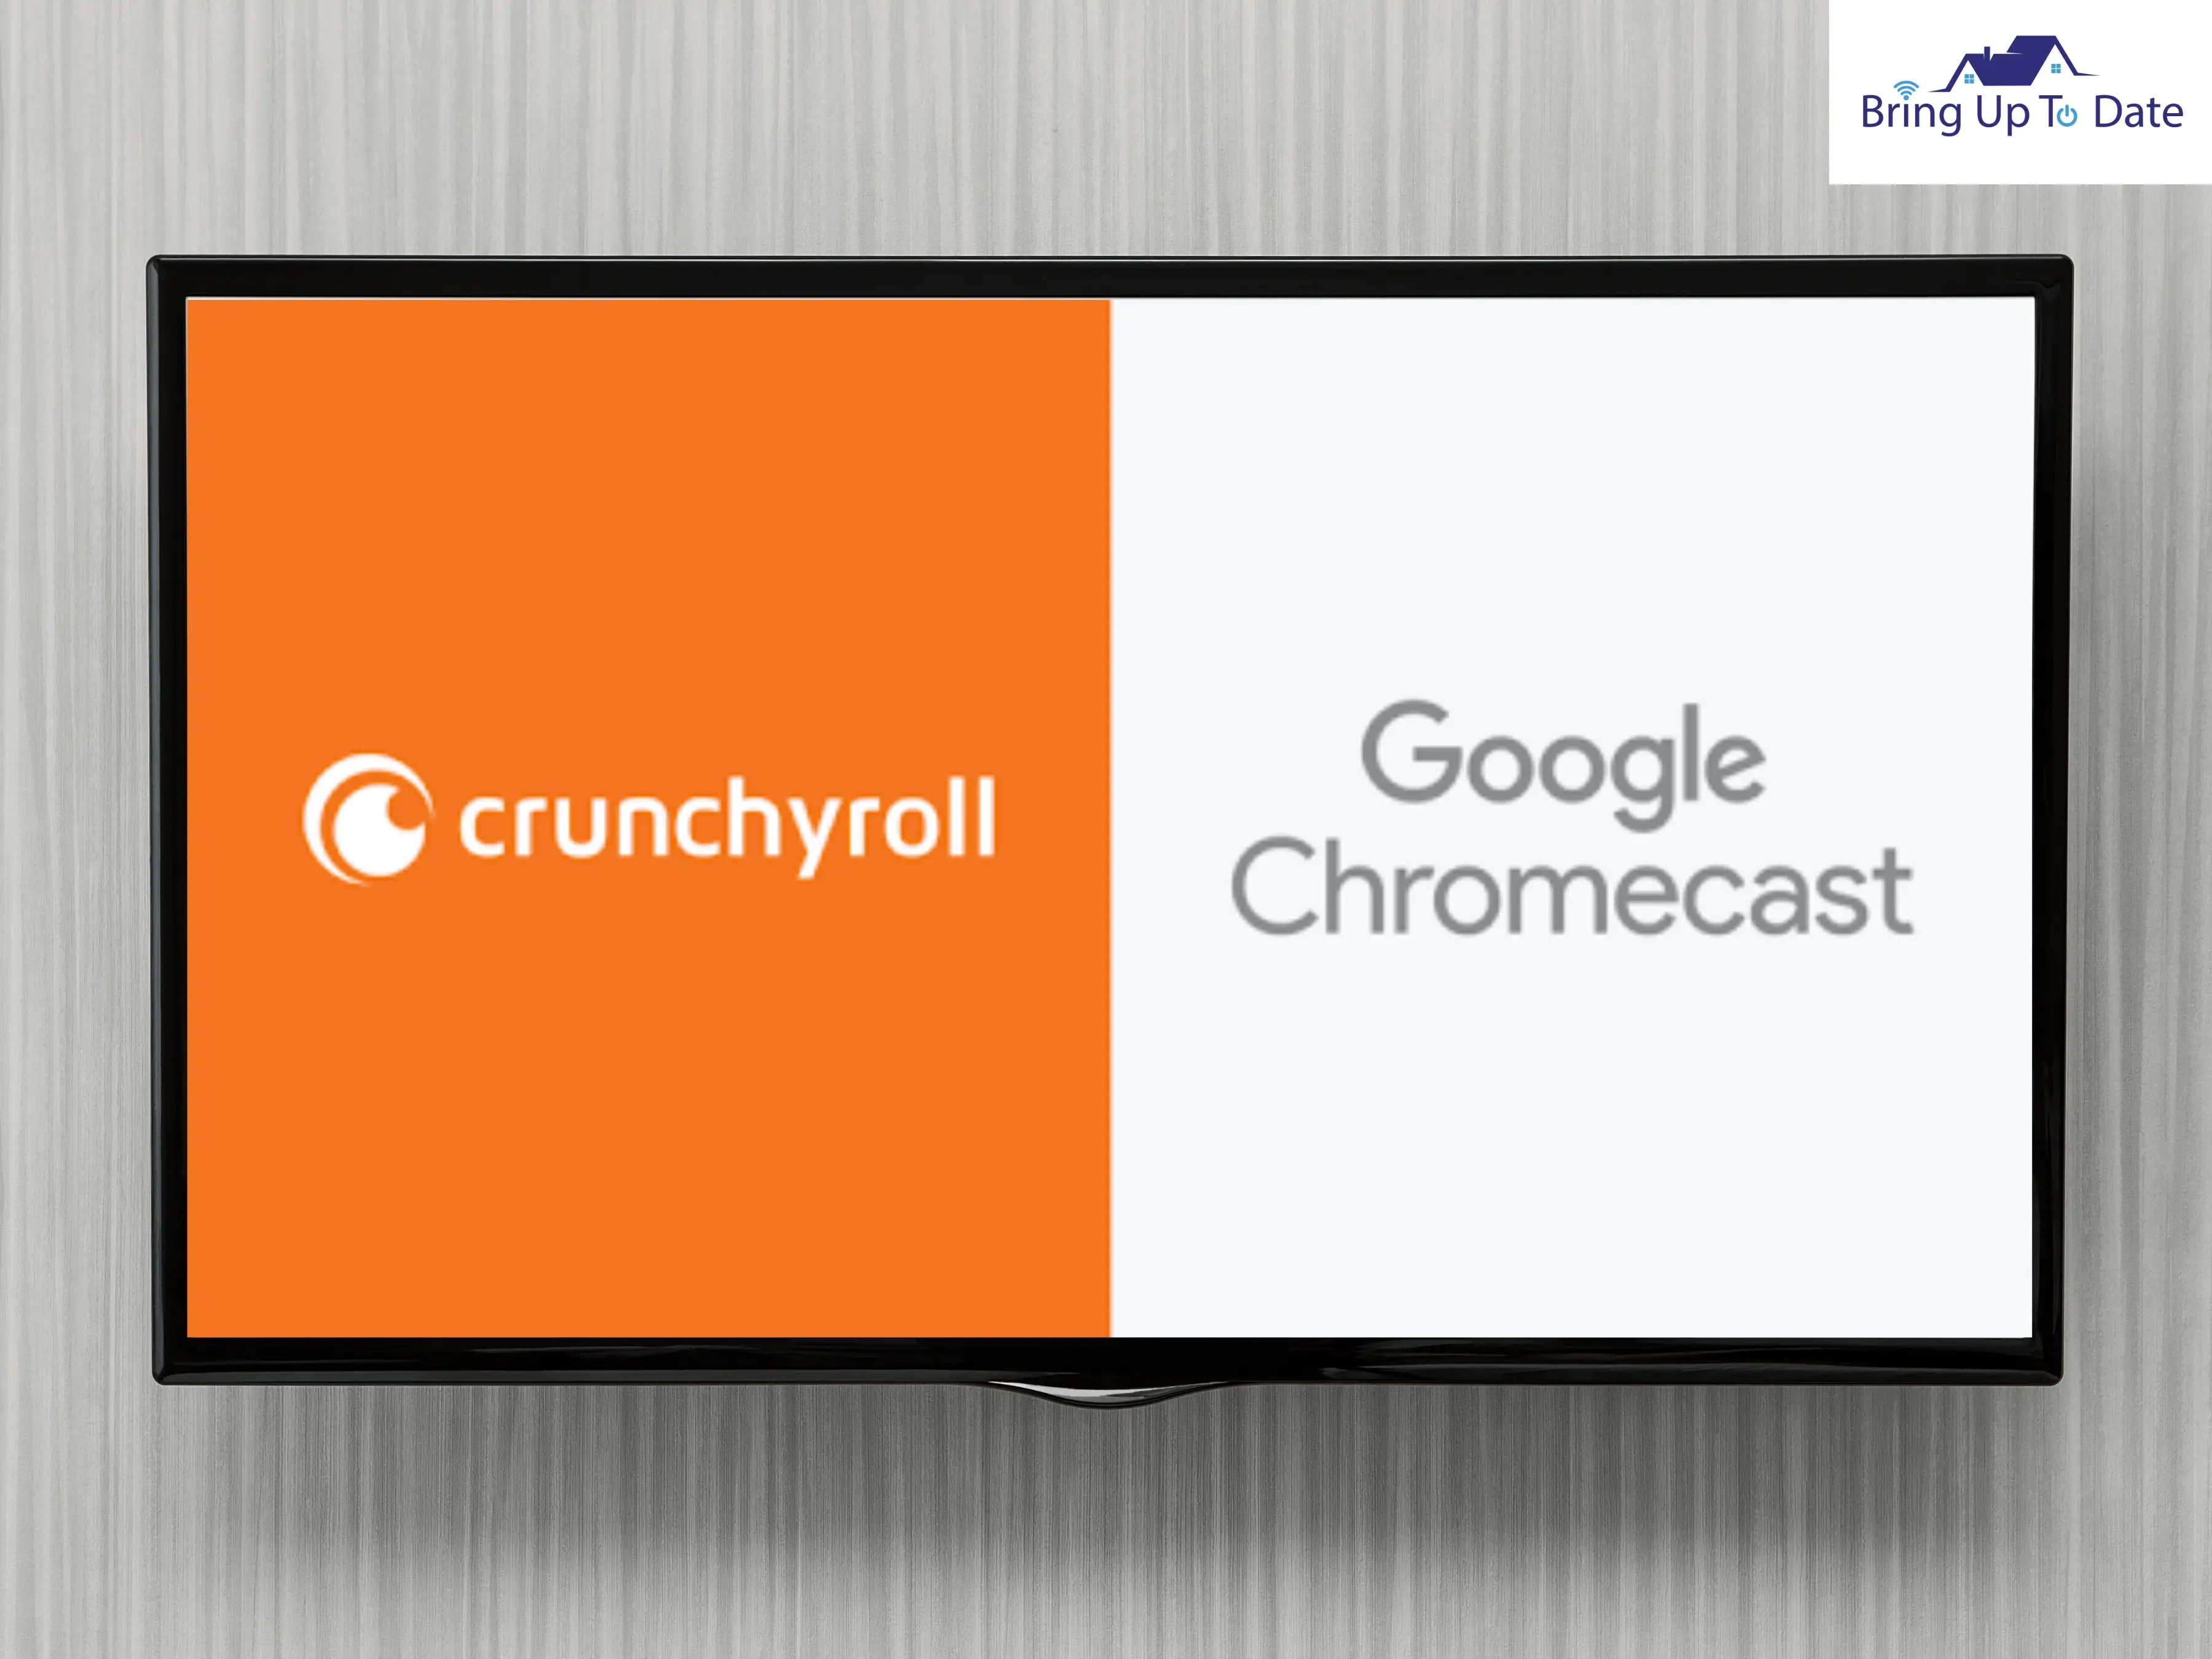 Using Google Chromecast